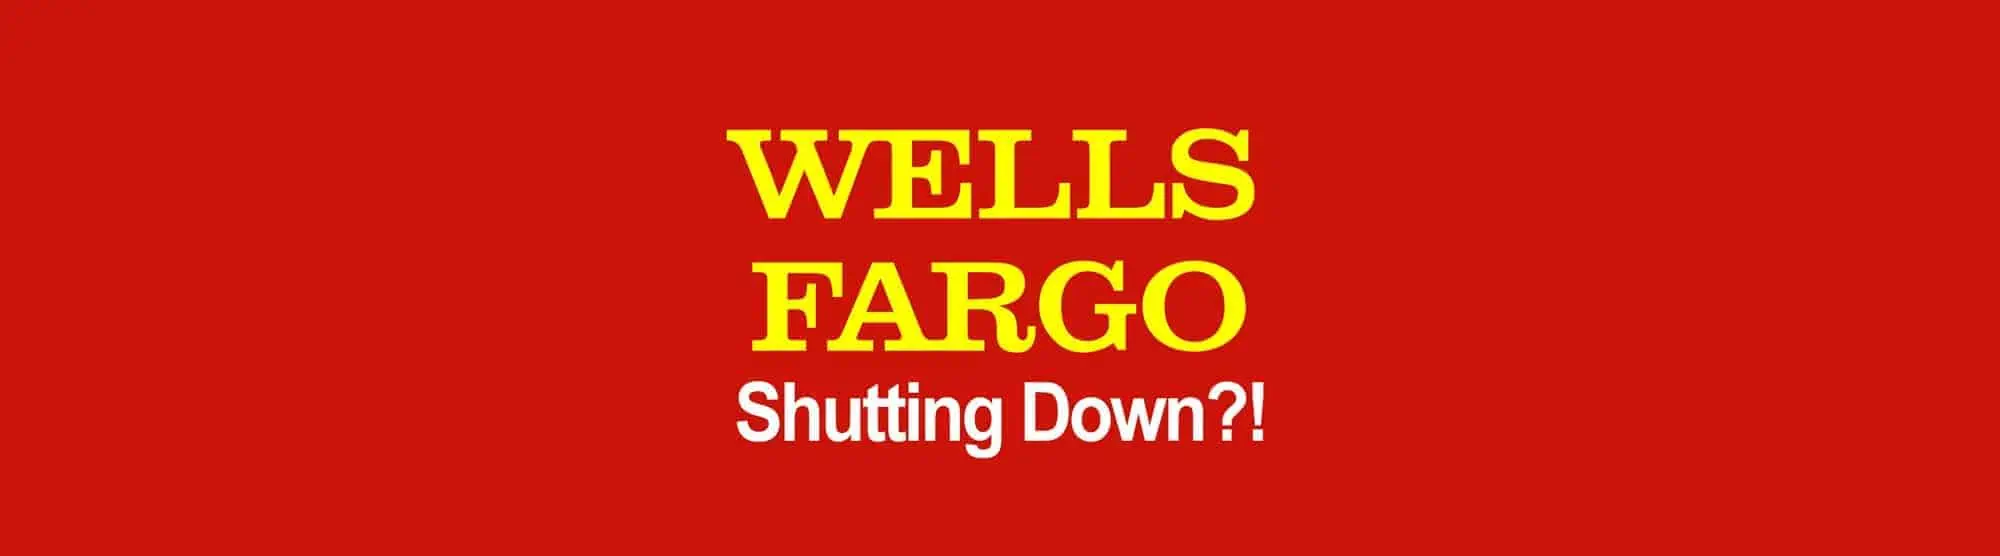 Wells fargo scandal shutdown